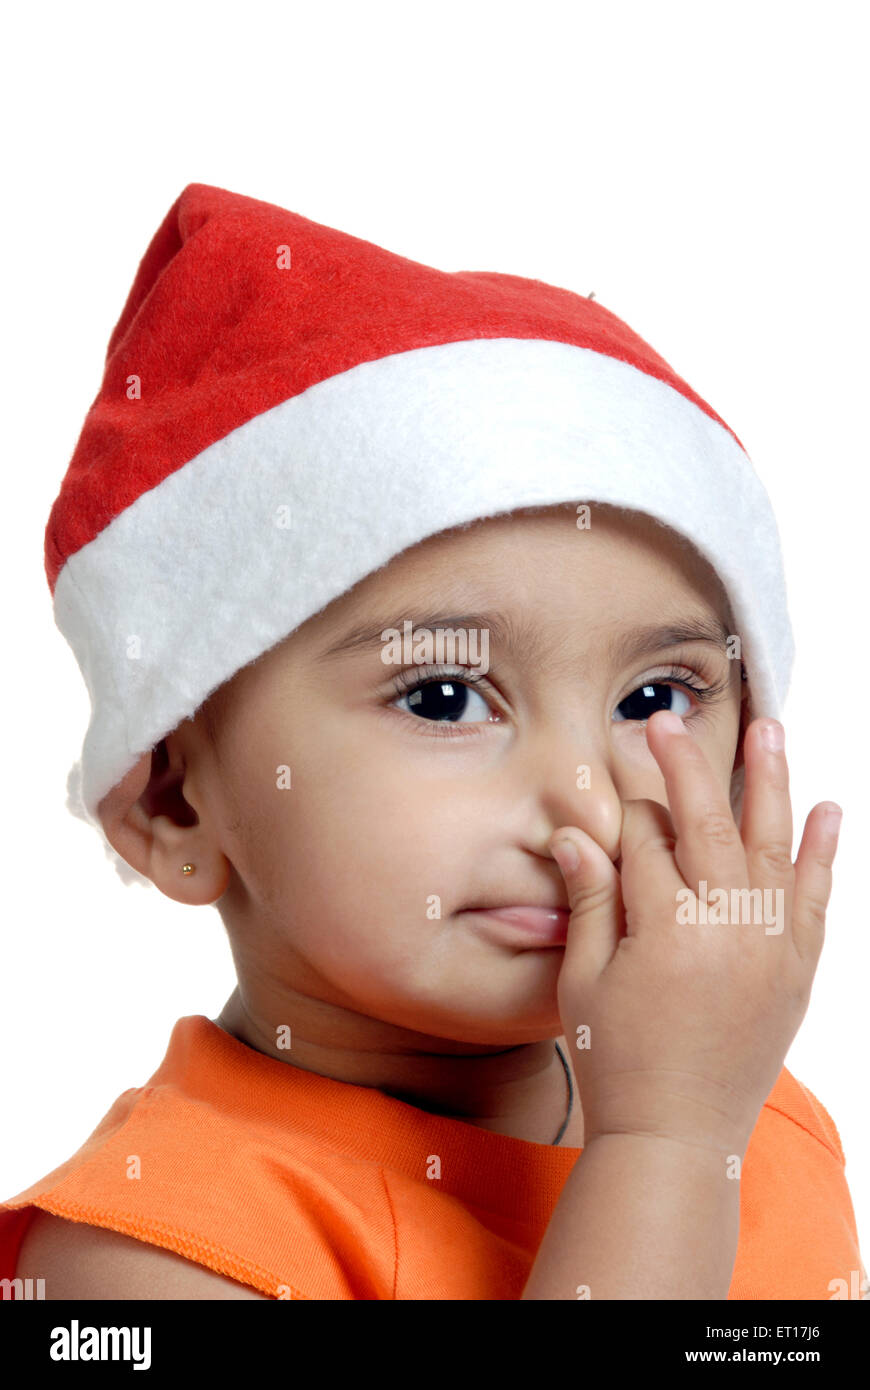 Baby boy santa claus cap holding pressing nose - MR#152 Stock Photo